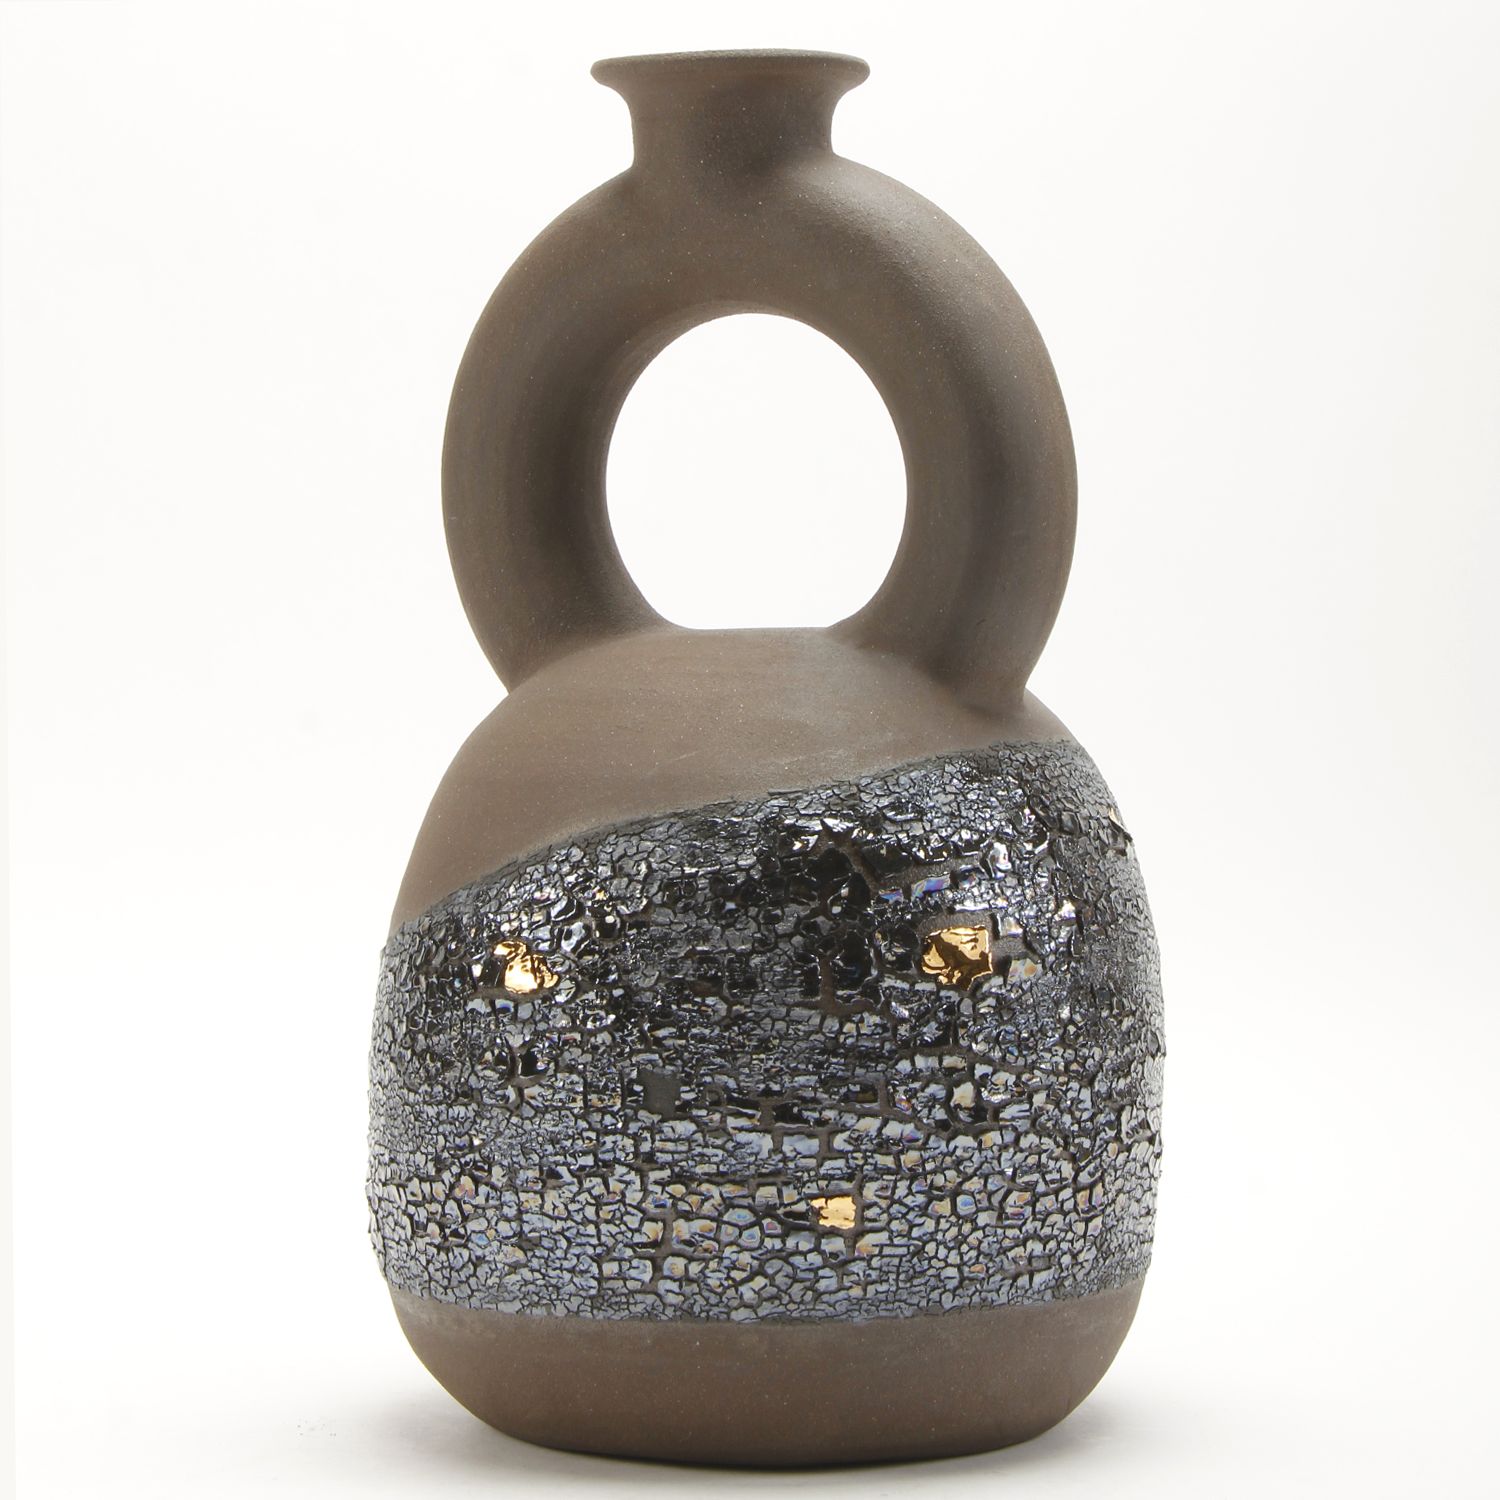 Cuir Ceramics: Large Brown Vessel Product Image 3 of 3